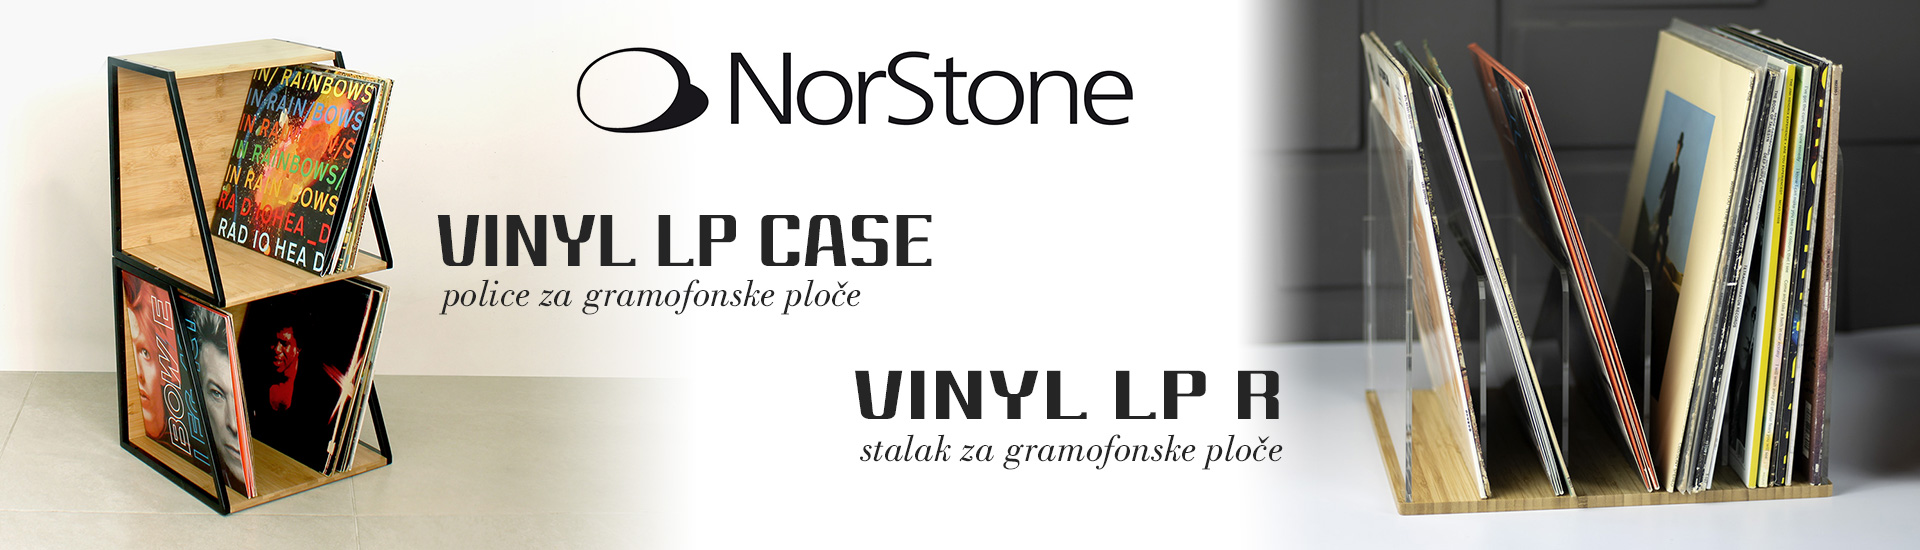 Norstone LP CASE I L PR stalak